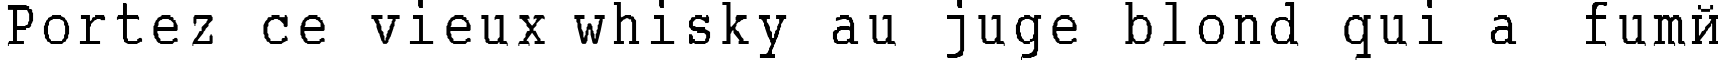 Пример написания шрифтом ABC_TypeWriterRussian текста на французском